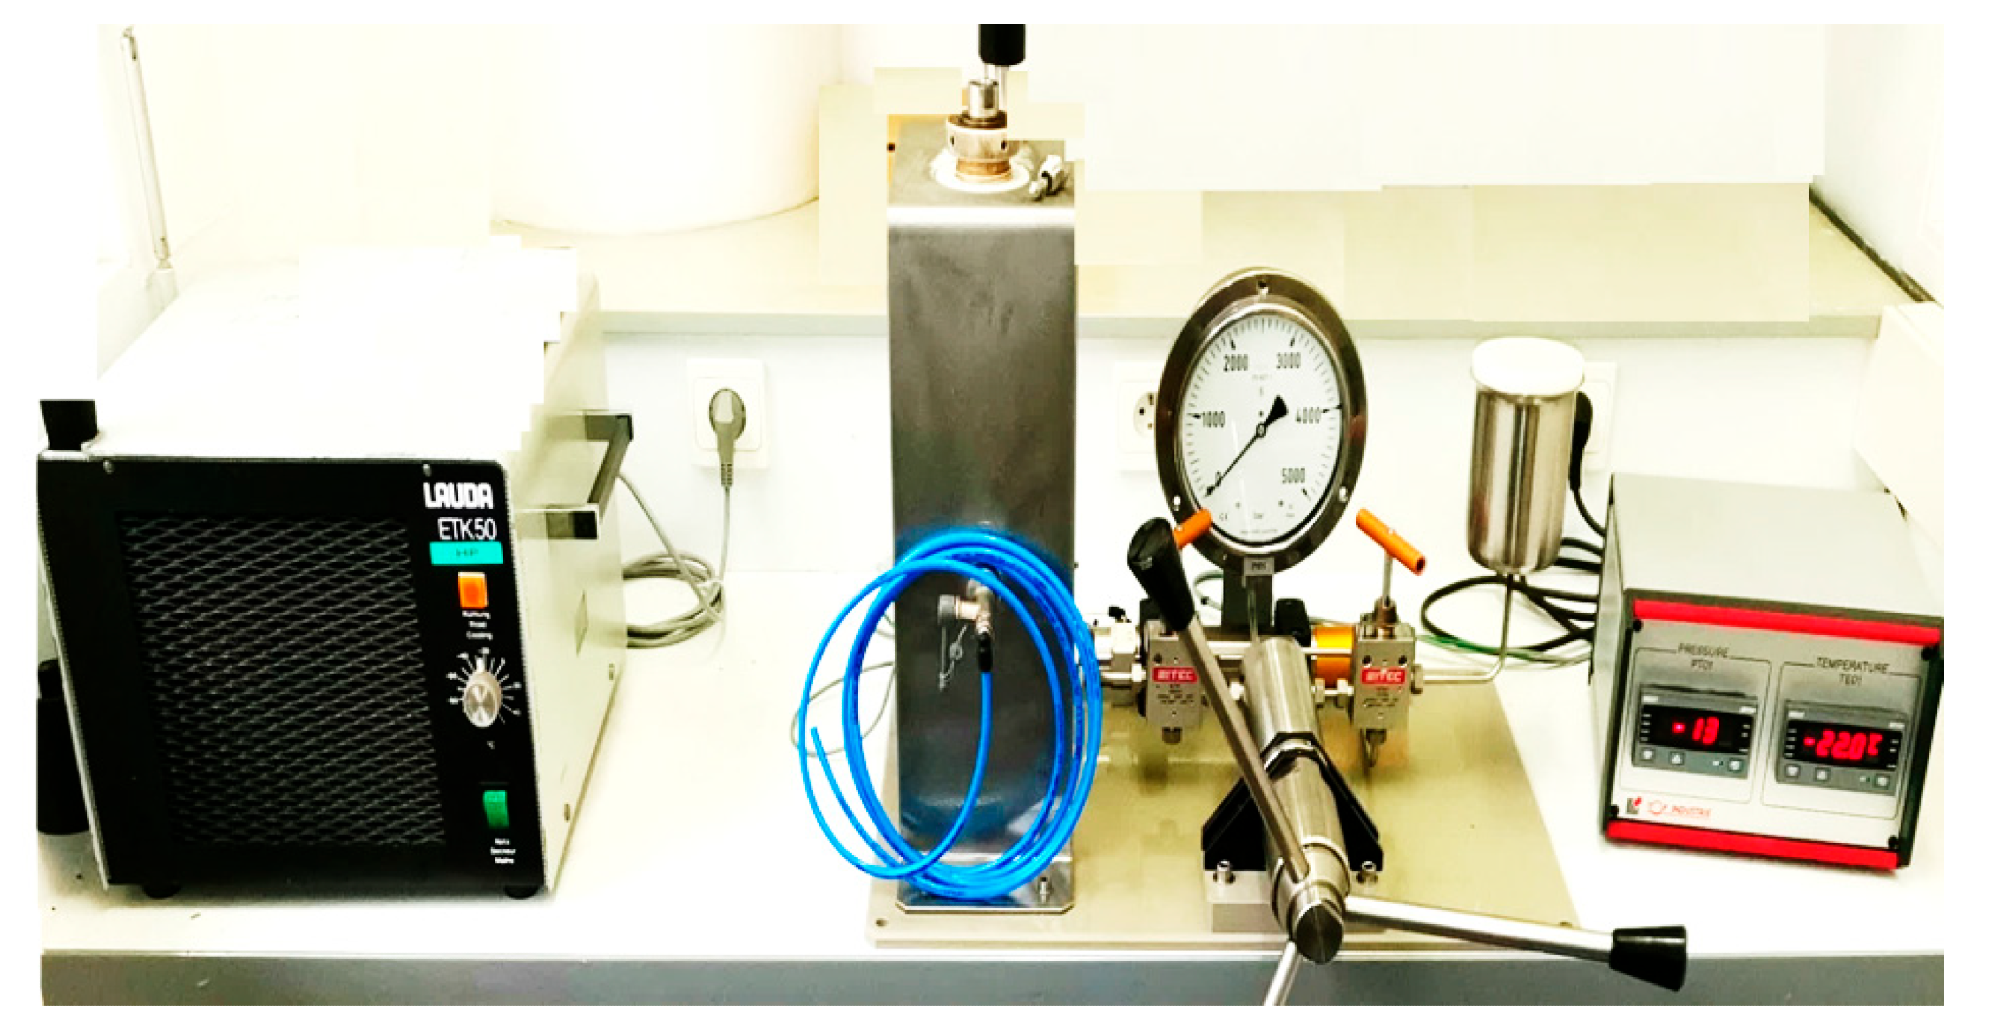 Freeze isostatic pressure equipment at ICMCB.